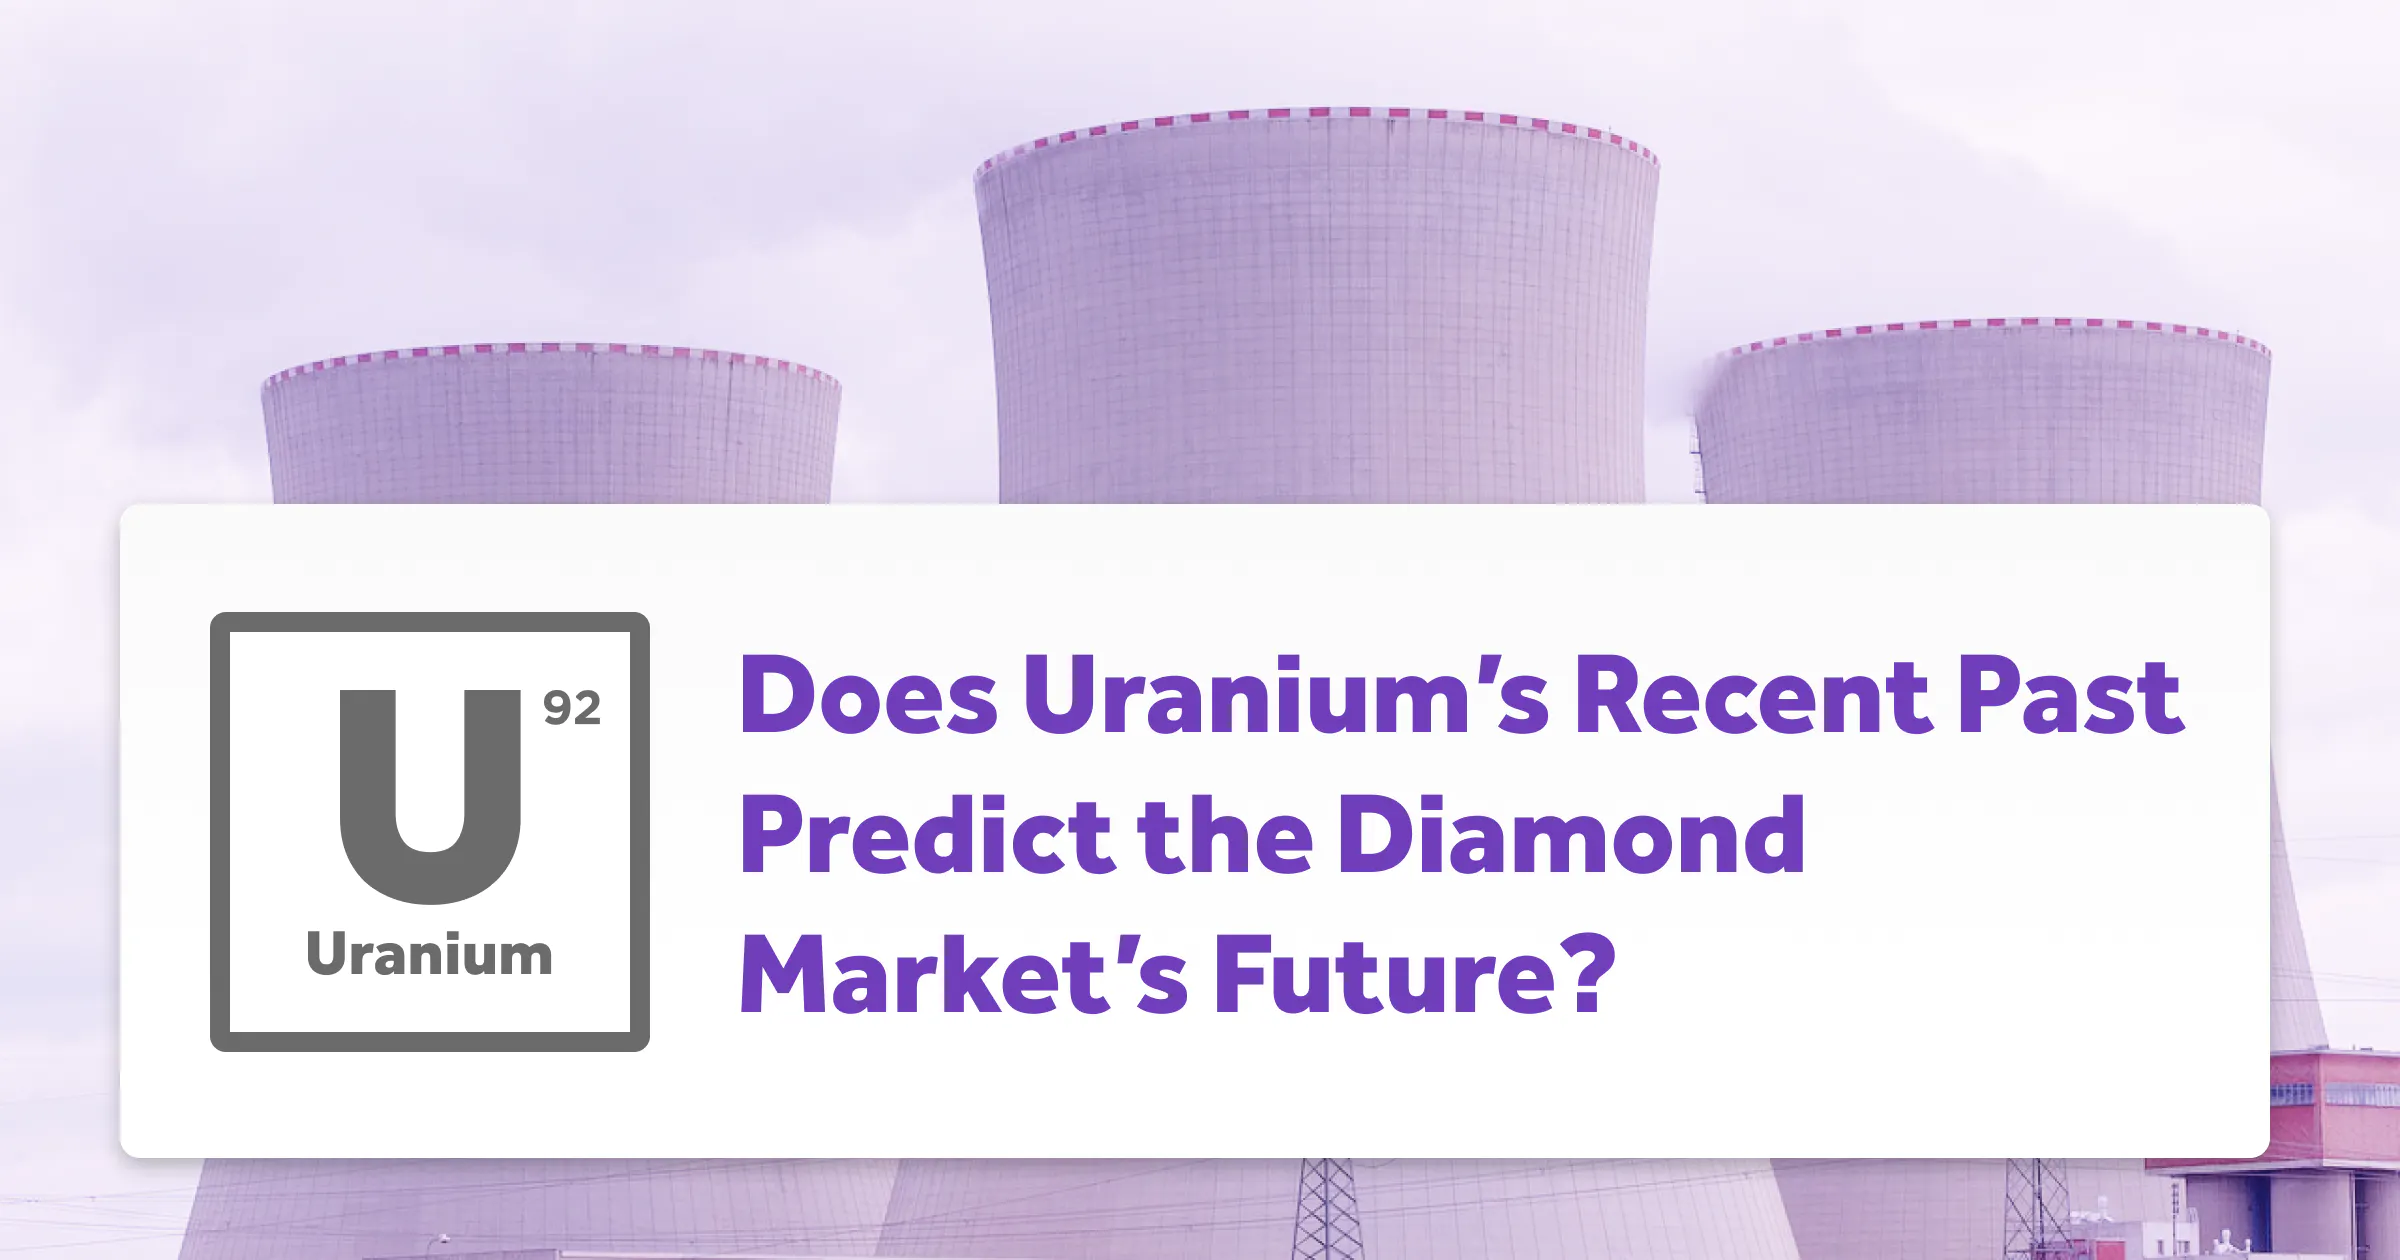 Does Uranium’s Recent Past Predict the Diamond Market’s Future?